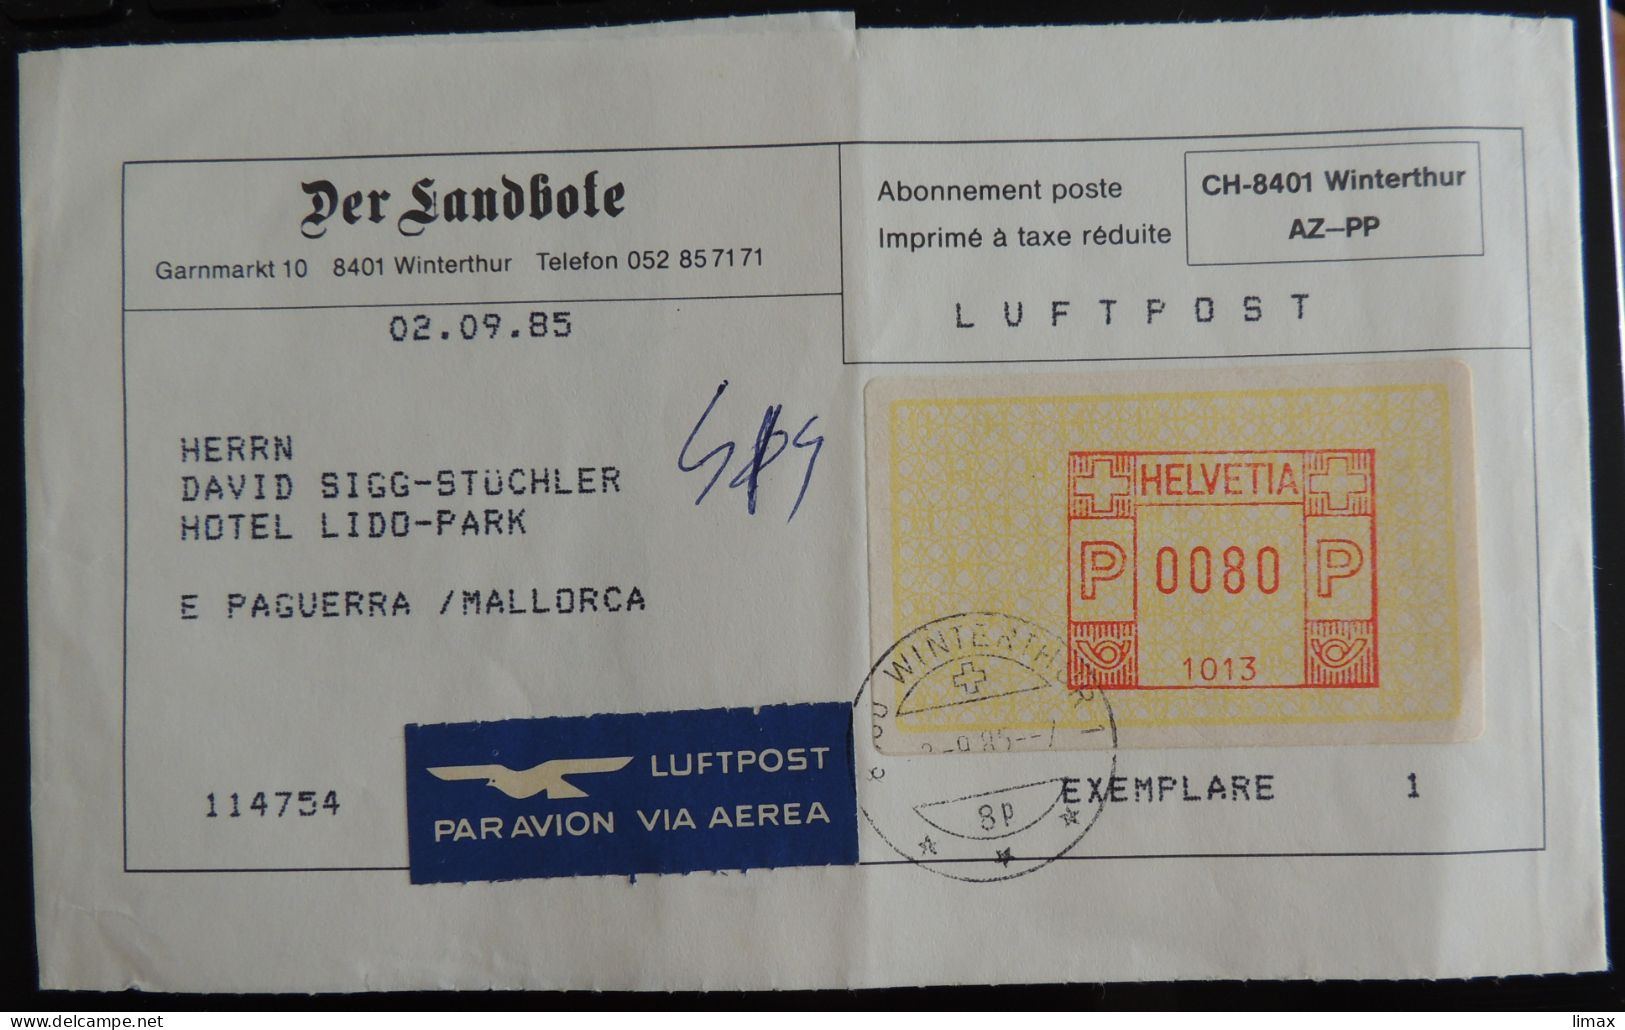 Der Landbote 8401 Winterthur 1985 > Paguerra [sic!] Mallorca - Luftpost - Frankiermaschinen (FraMA)